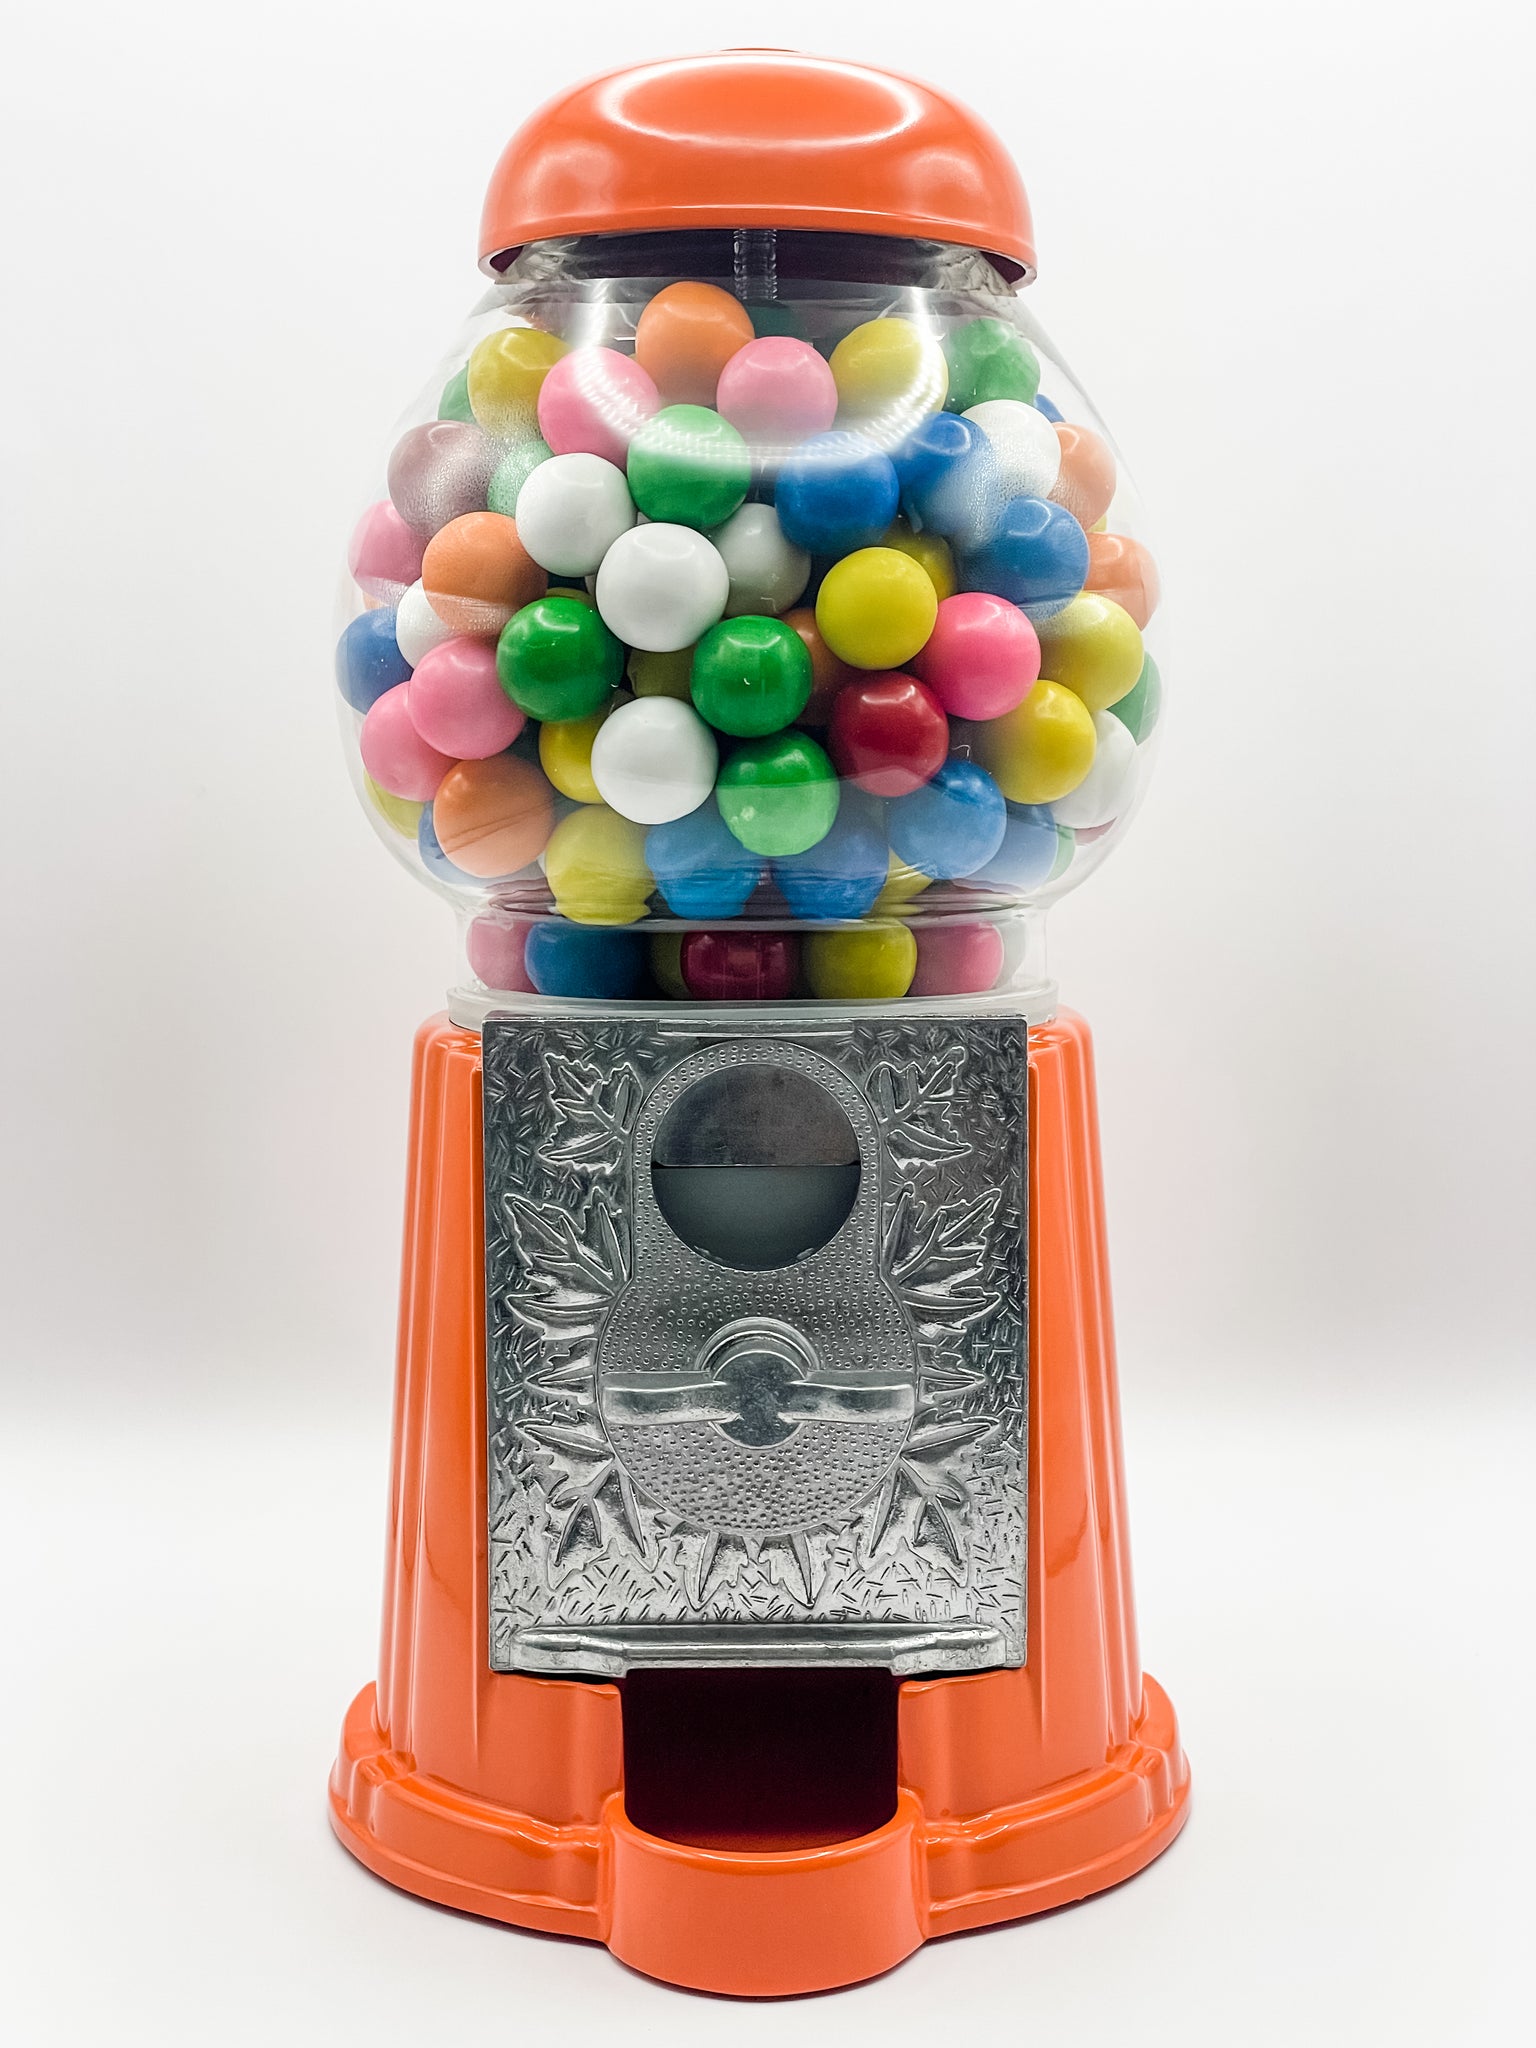 Gumball Dreams Classic Gumball Machine / Candy Dispenser - Orange